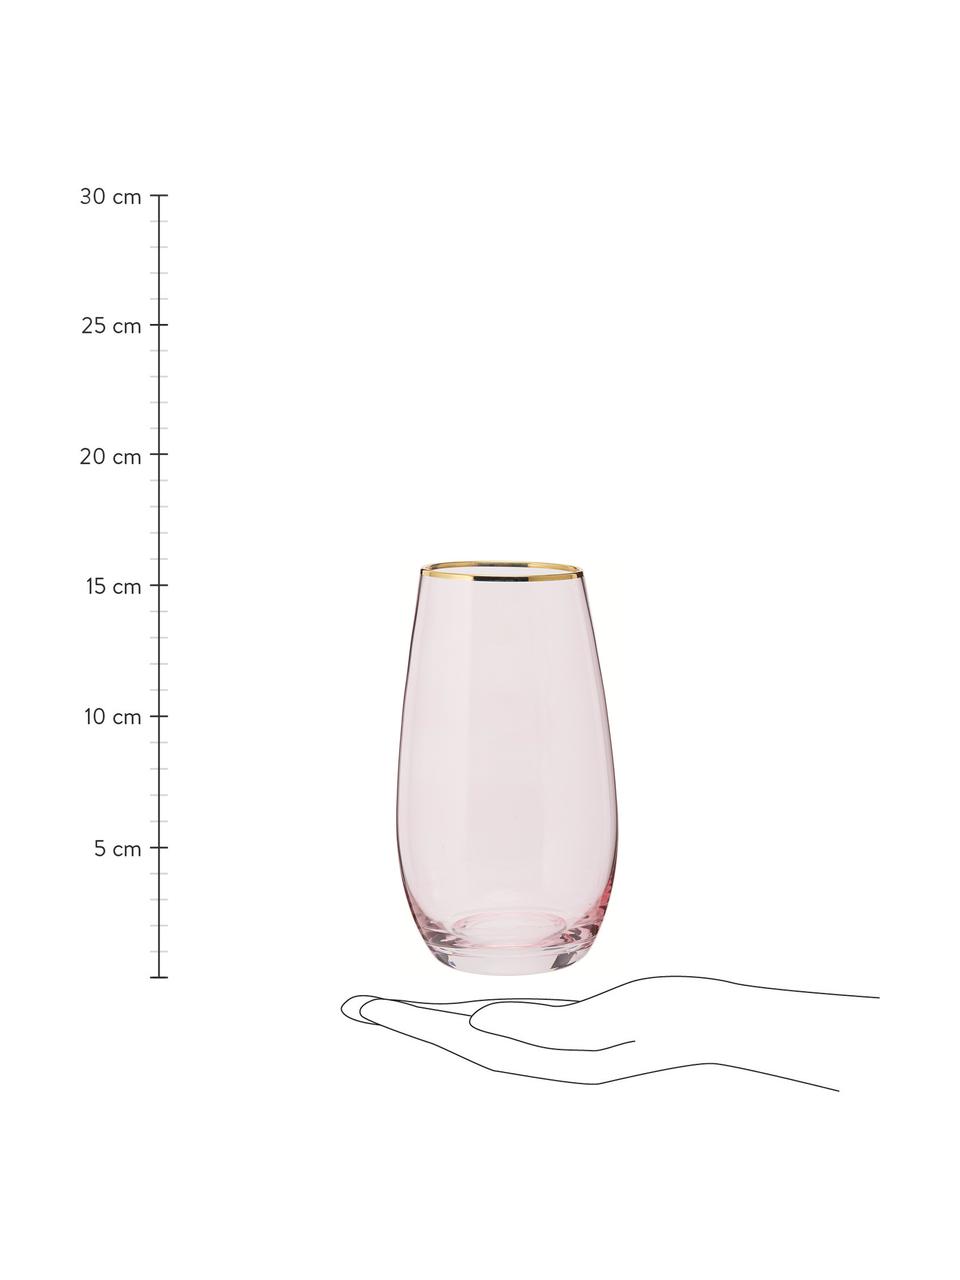 Hohe Gläser Chloe in Rosa mit Goldrand, 4 Stück, Glas, Pfirsich, Ø 9 x H 16 cm